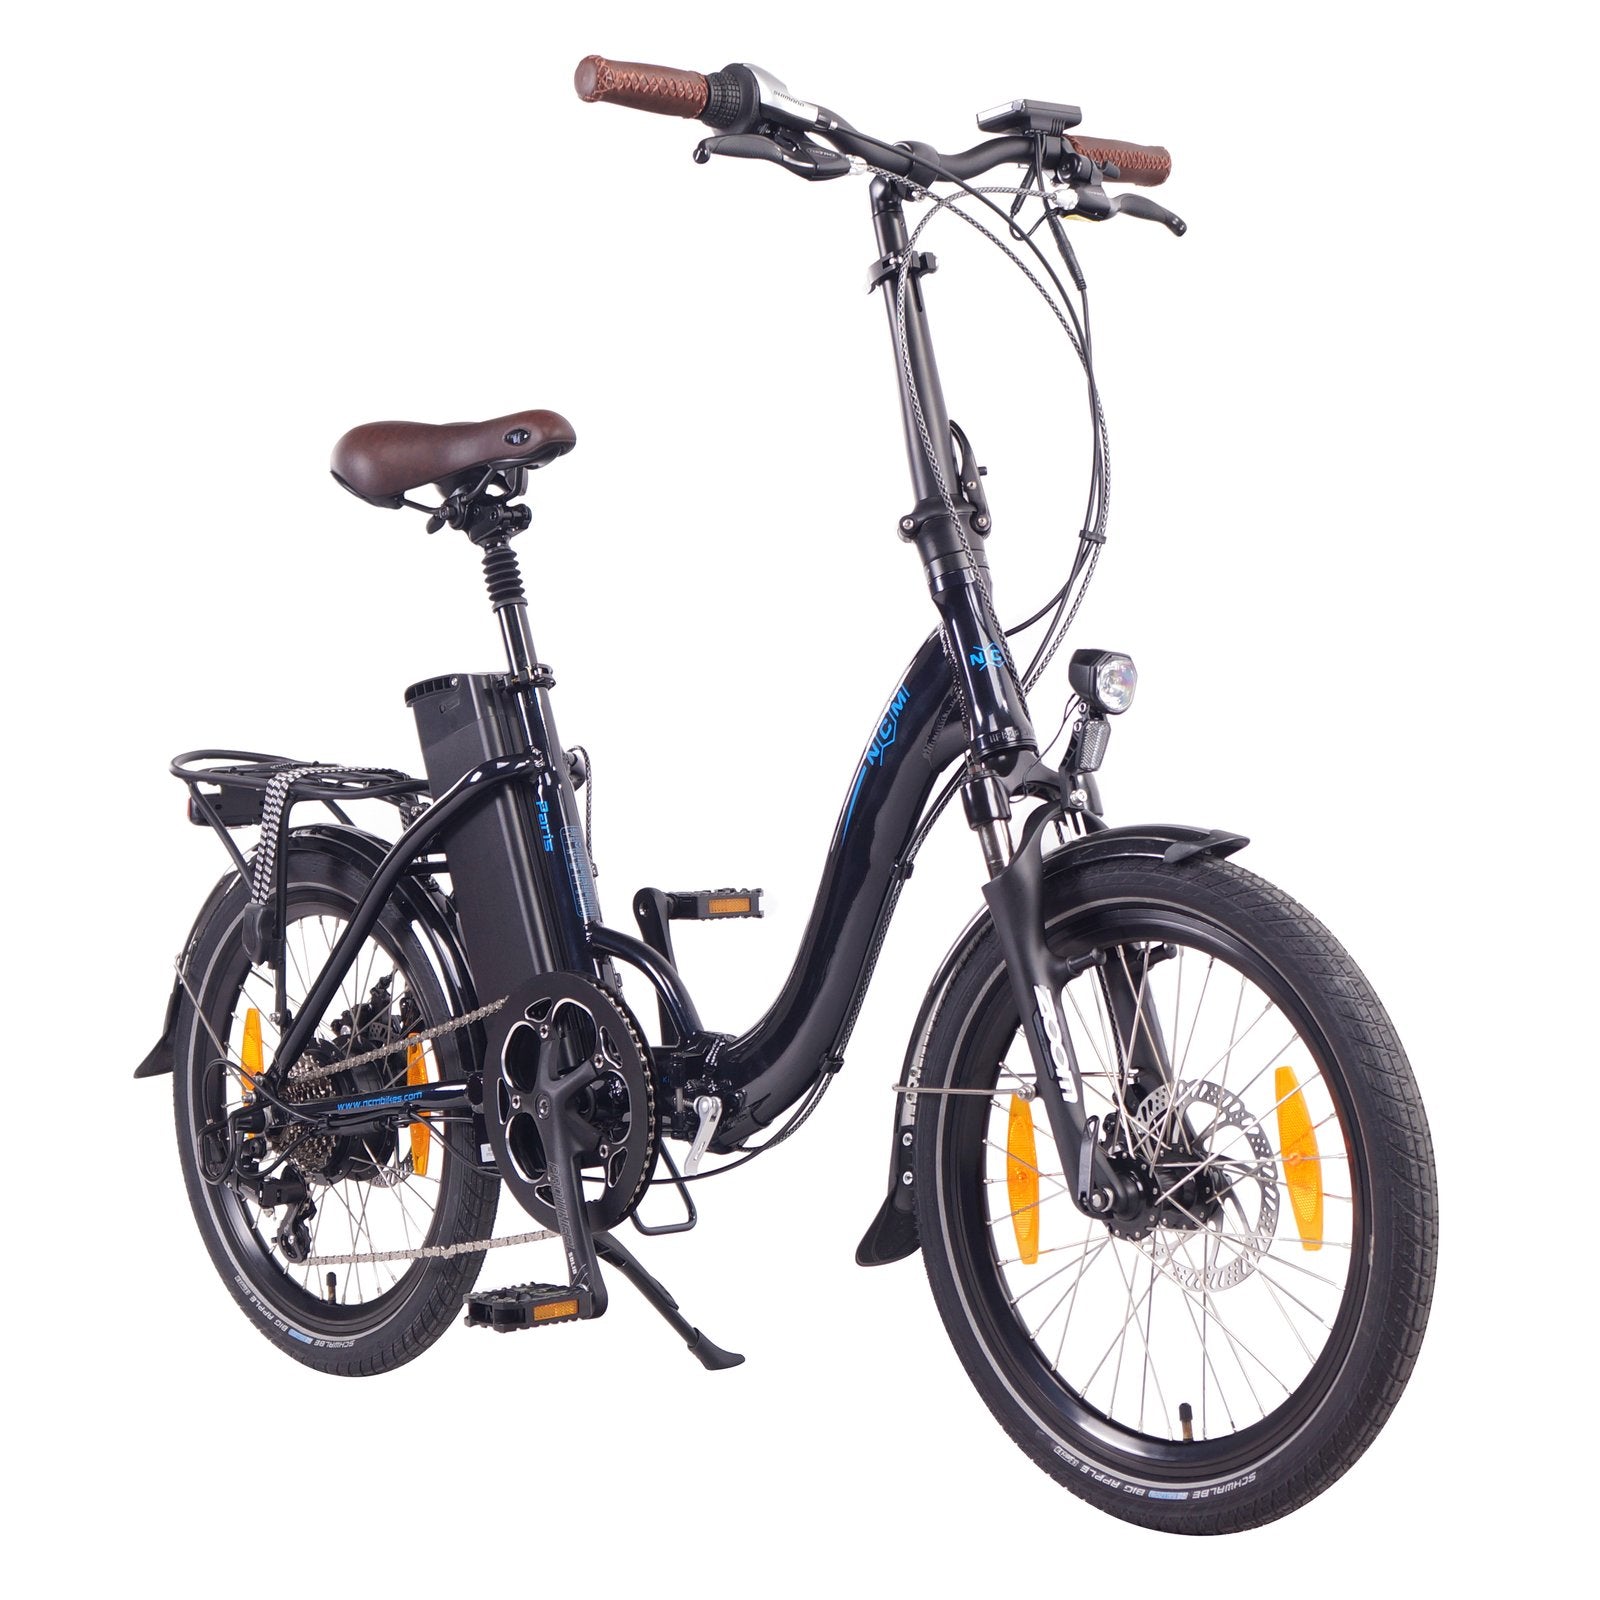 NCM Paris+ Folding E-Bike, 250W, 36V 19Ah 684Wh Battery, Size 20